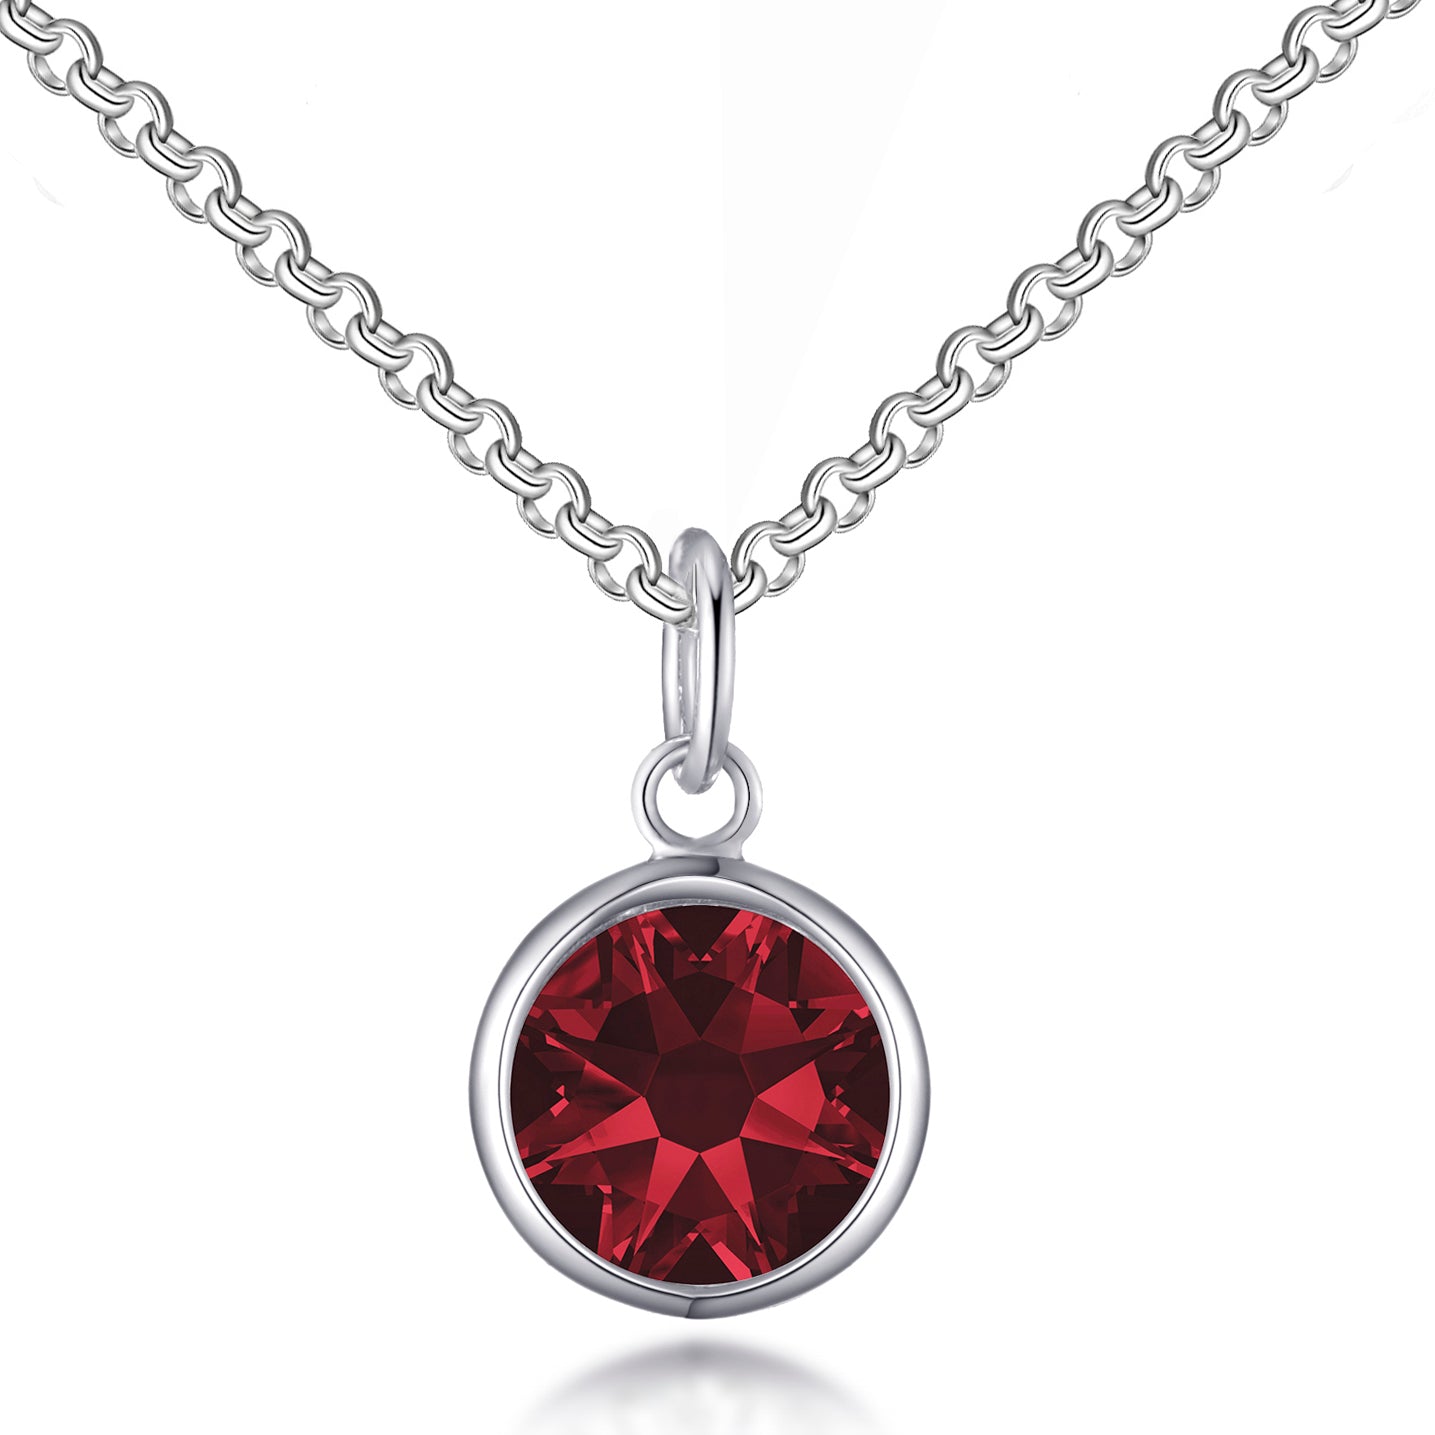 Dark Red Crystal Necklace Created with Zircondia® Crystals by Philip Jones Jewellery